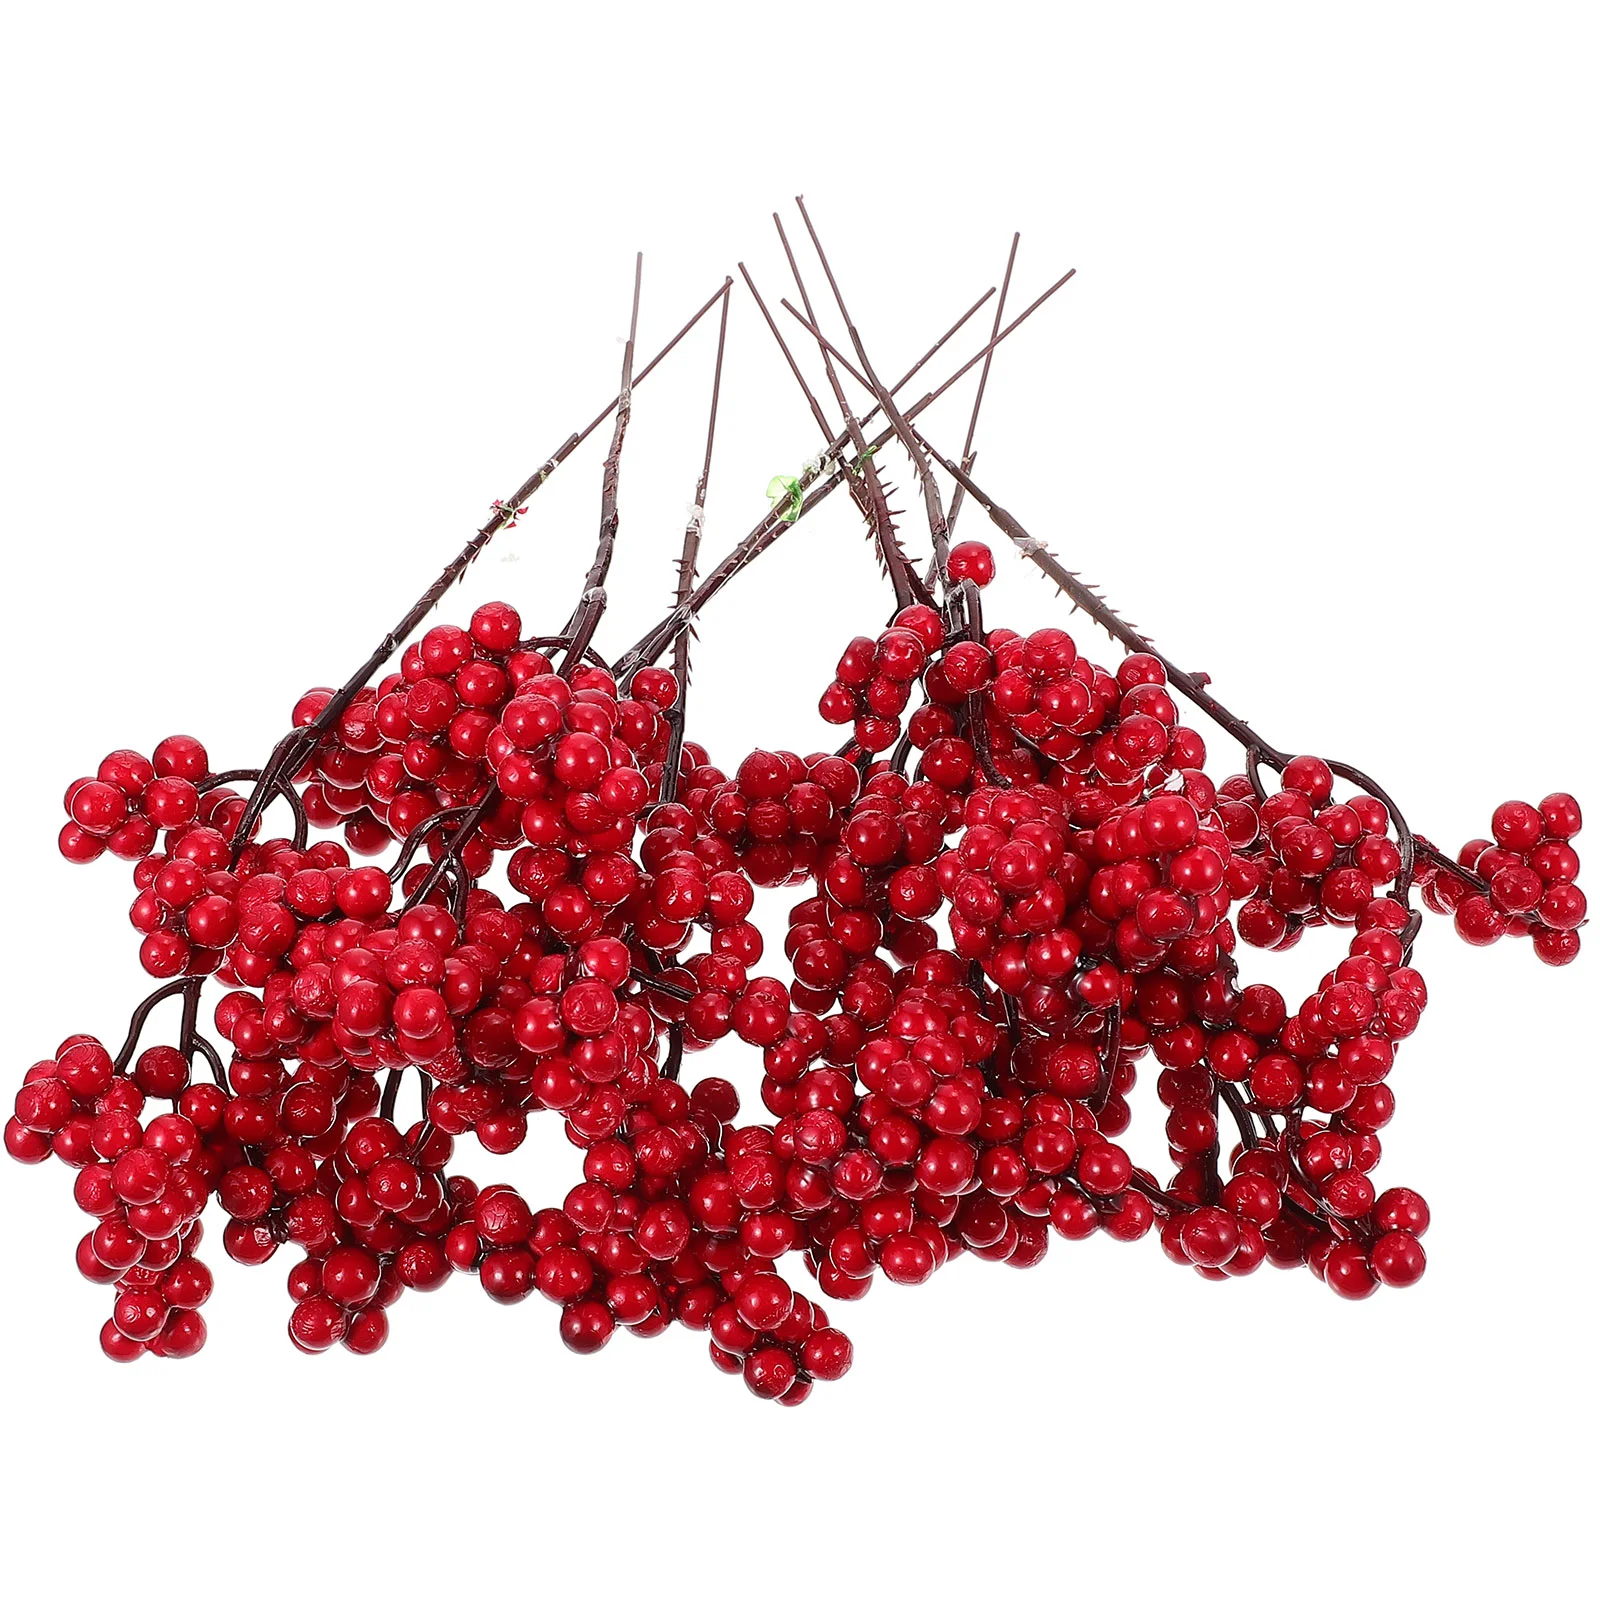 

10 PCS Artificial Berries Lifelike Branched Berry Decor Decorations Christmas Simulation Plastic Vivid Cotton dried flower